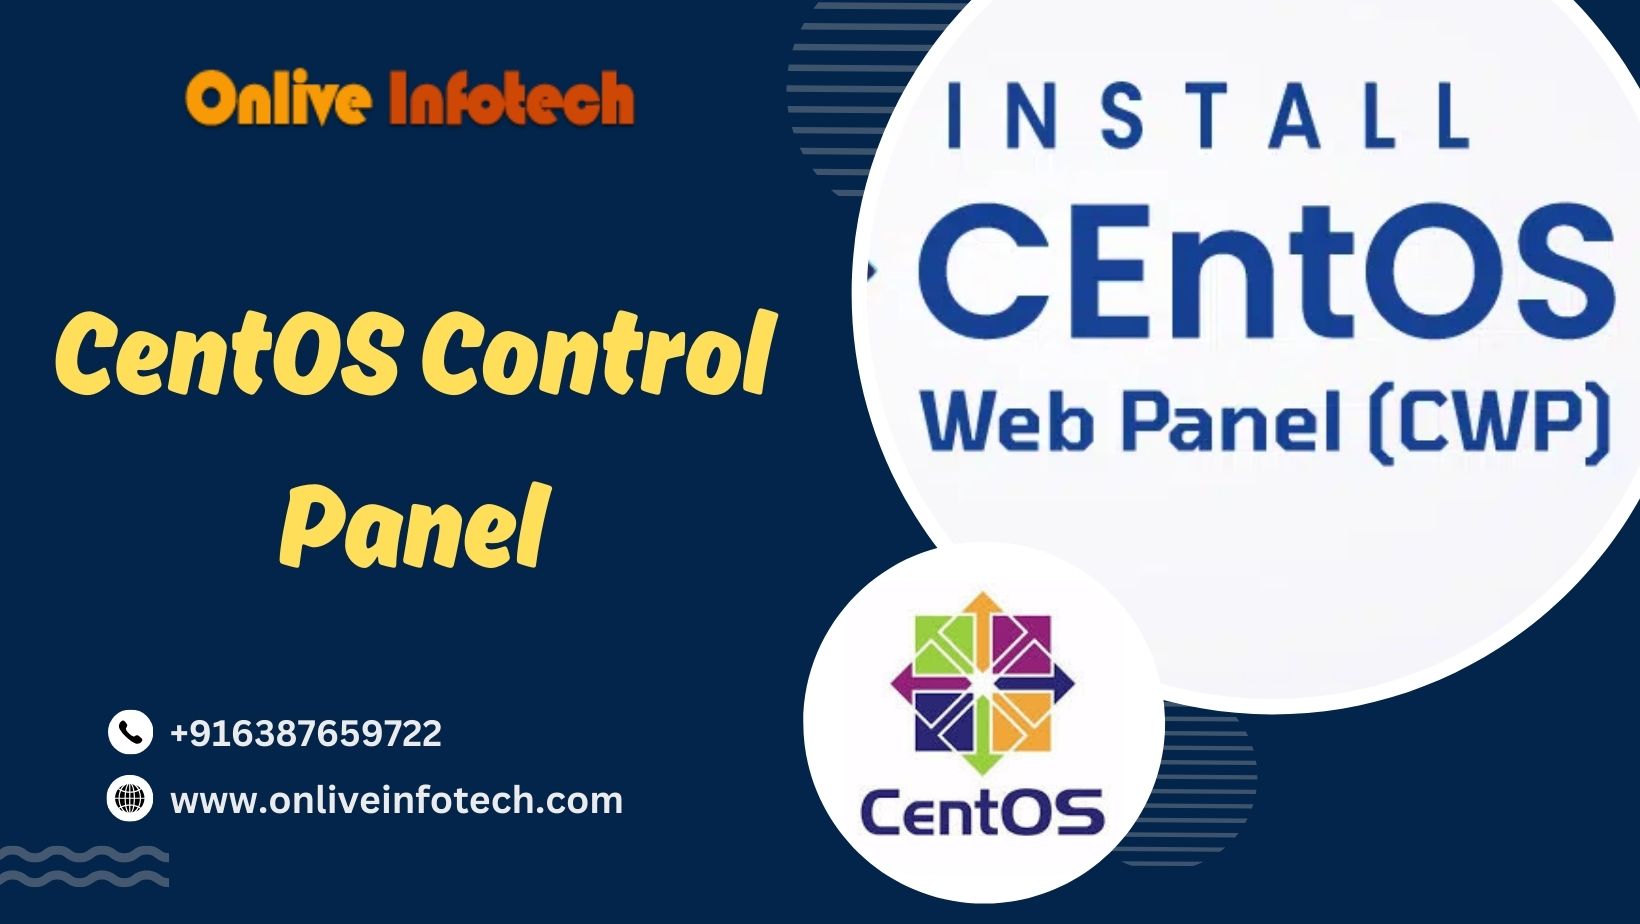 CentOS Control Panel